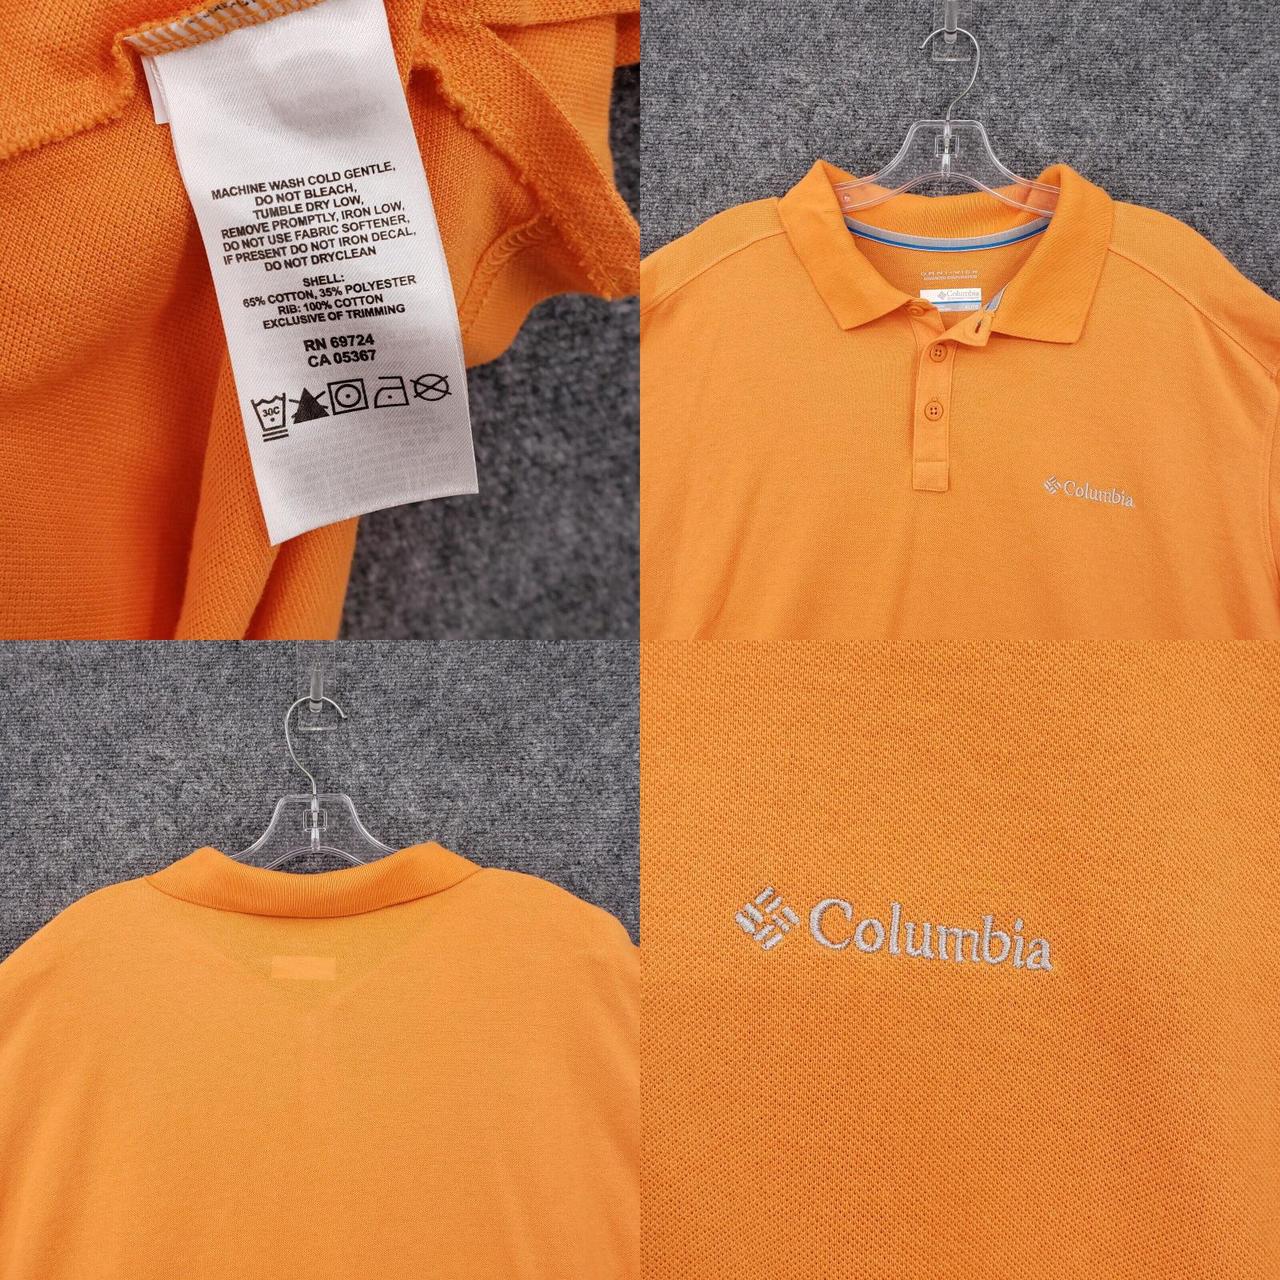 Omnitau Men's Drive Organic Cotton Avant Polo Shirt - Bright Orange Orange / S